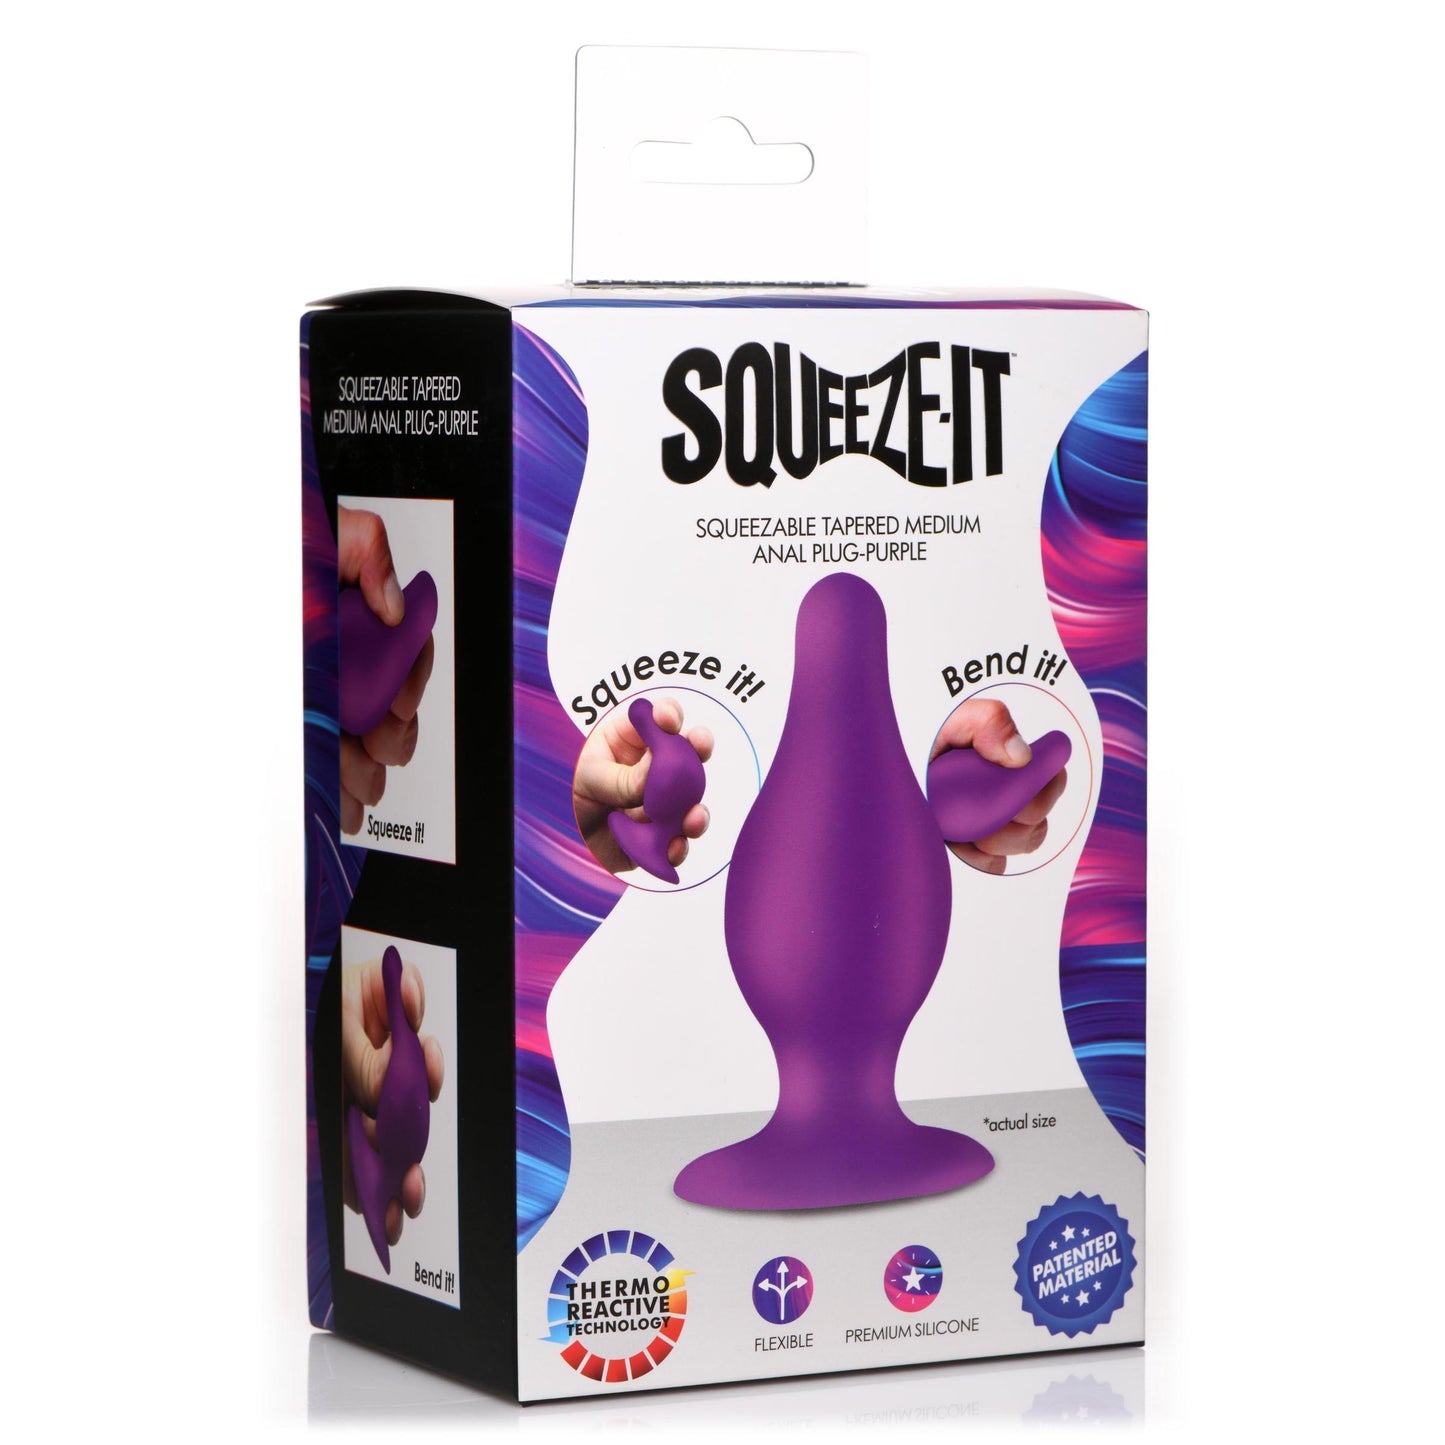 Squeezable Tapered Medium Anal Plug - Purple